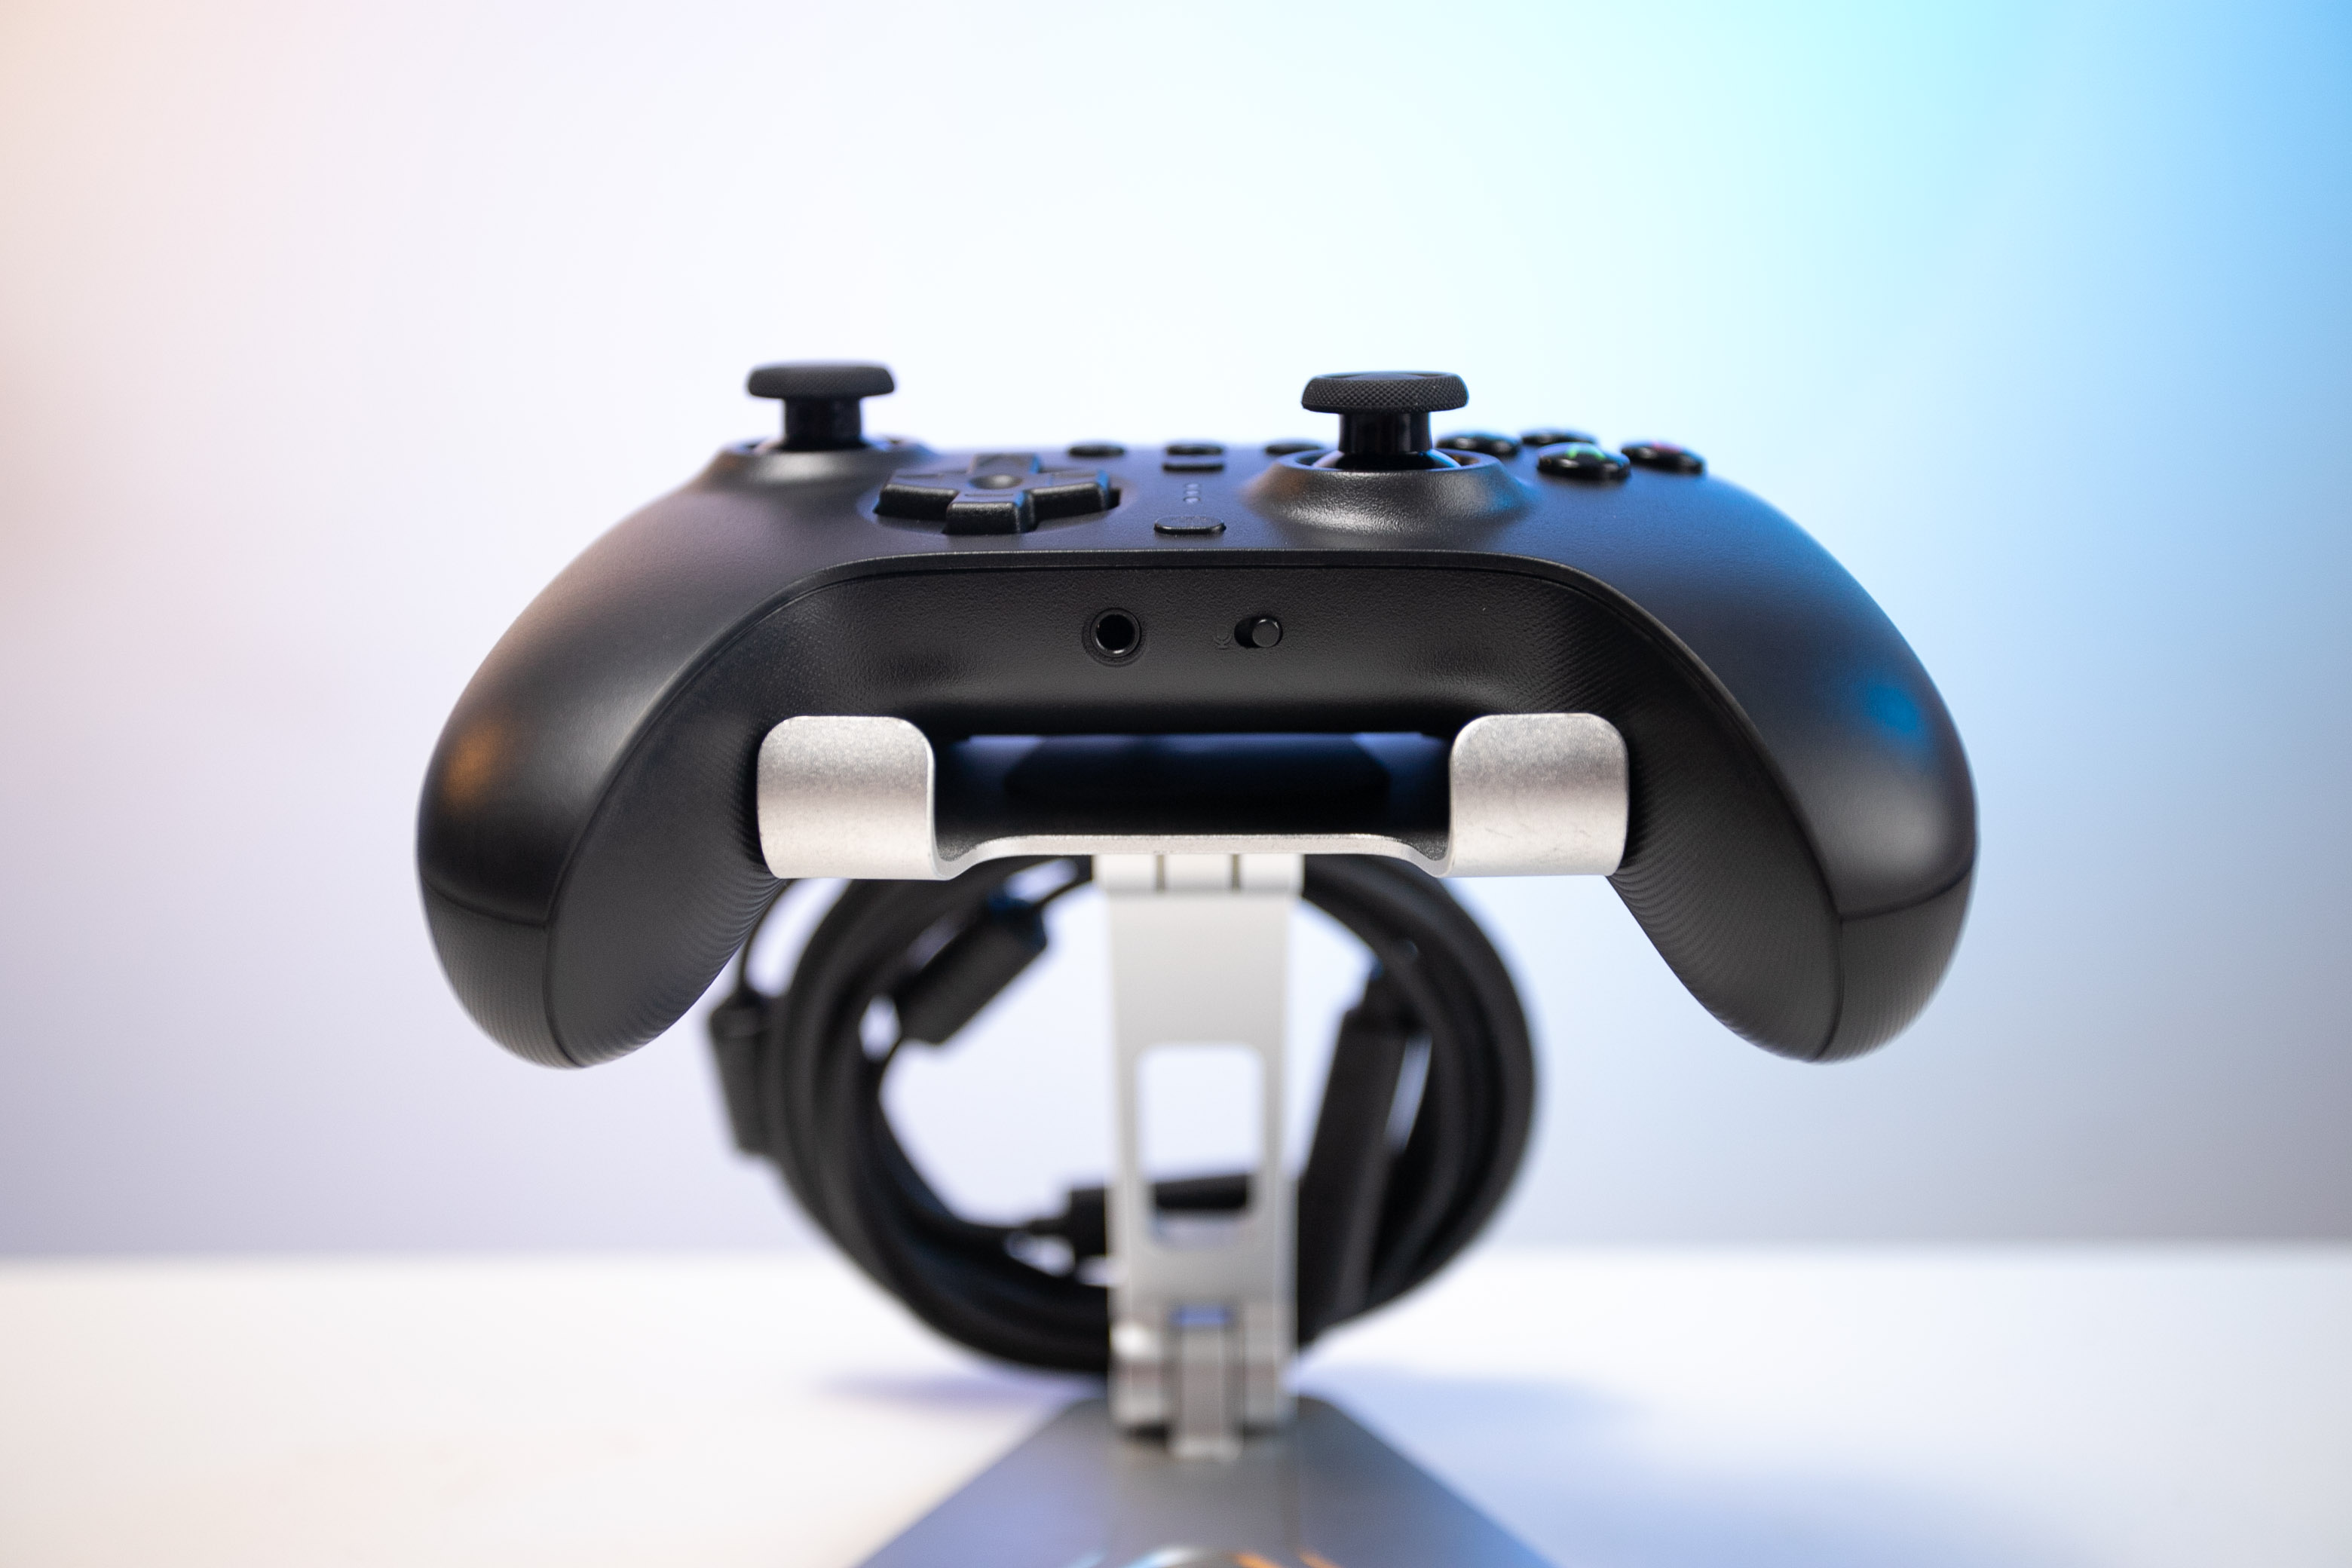 Tay cầm chơi game 8BitDo Ultimate Wired Controller cho Xbox/PC màu đen